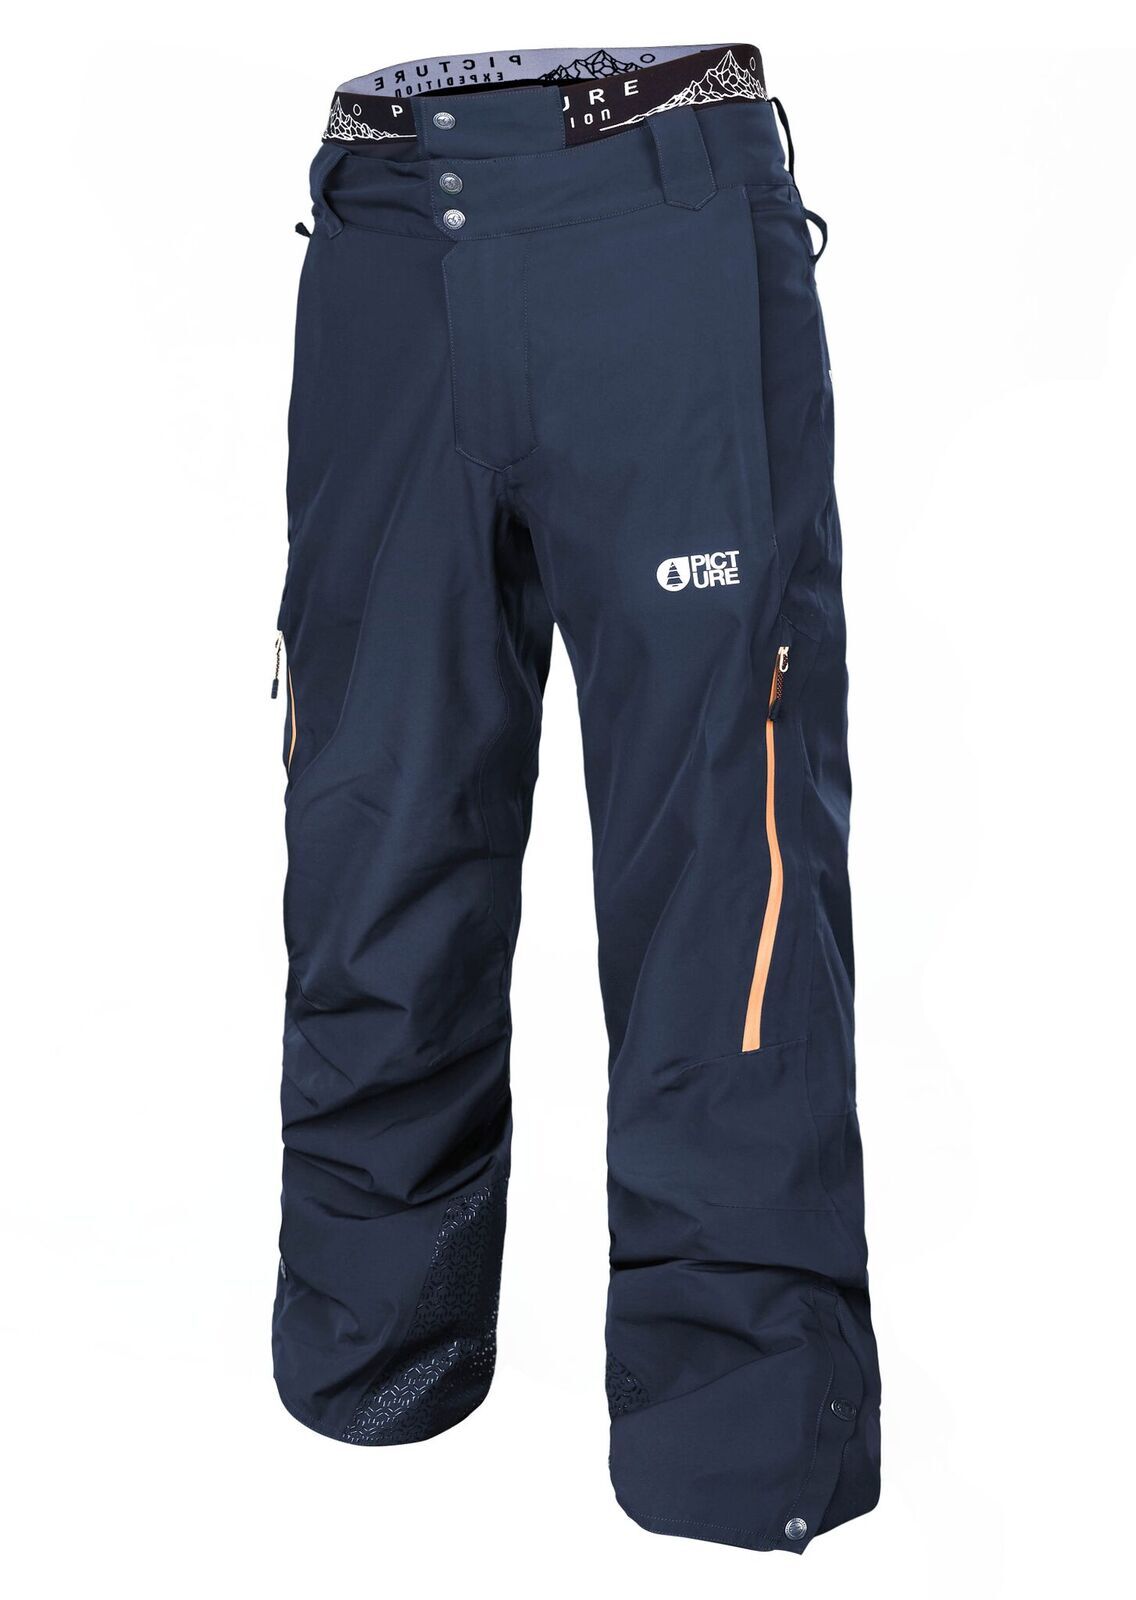 Picture Organic Clothing - Object - Ski pants - Men's